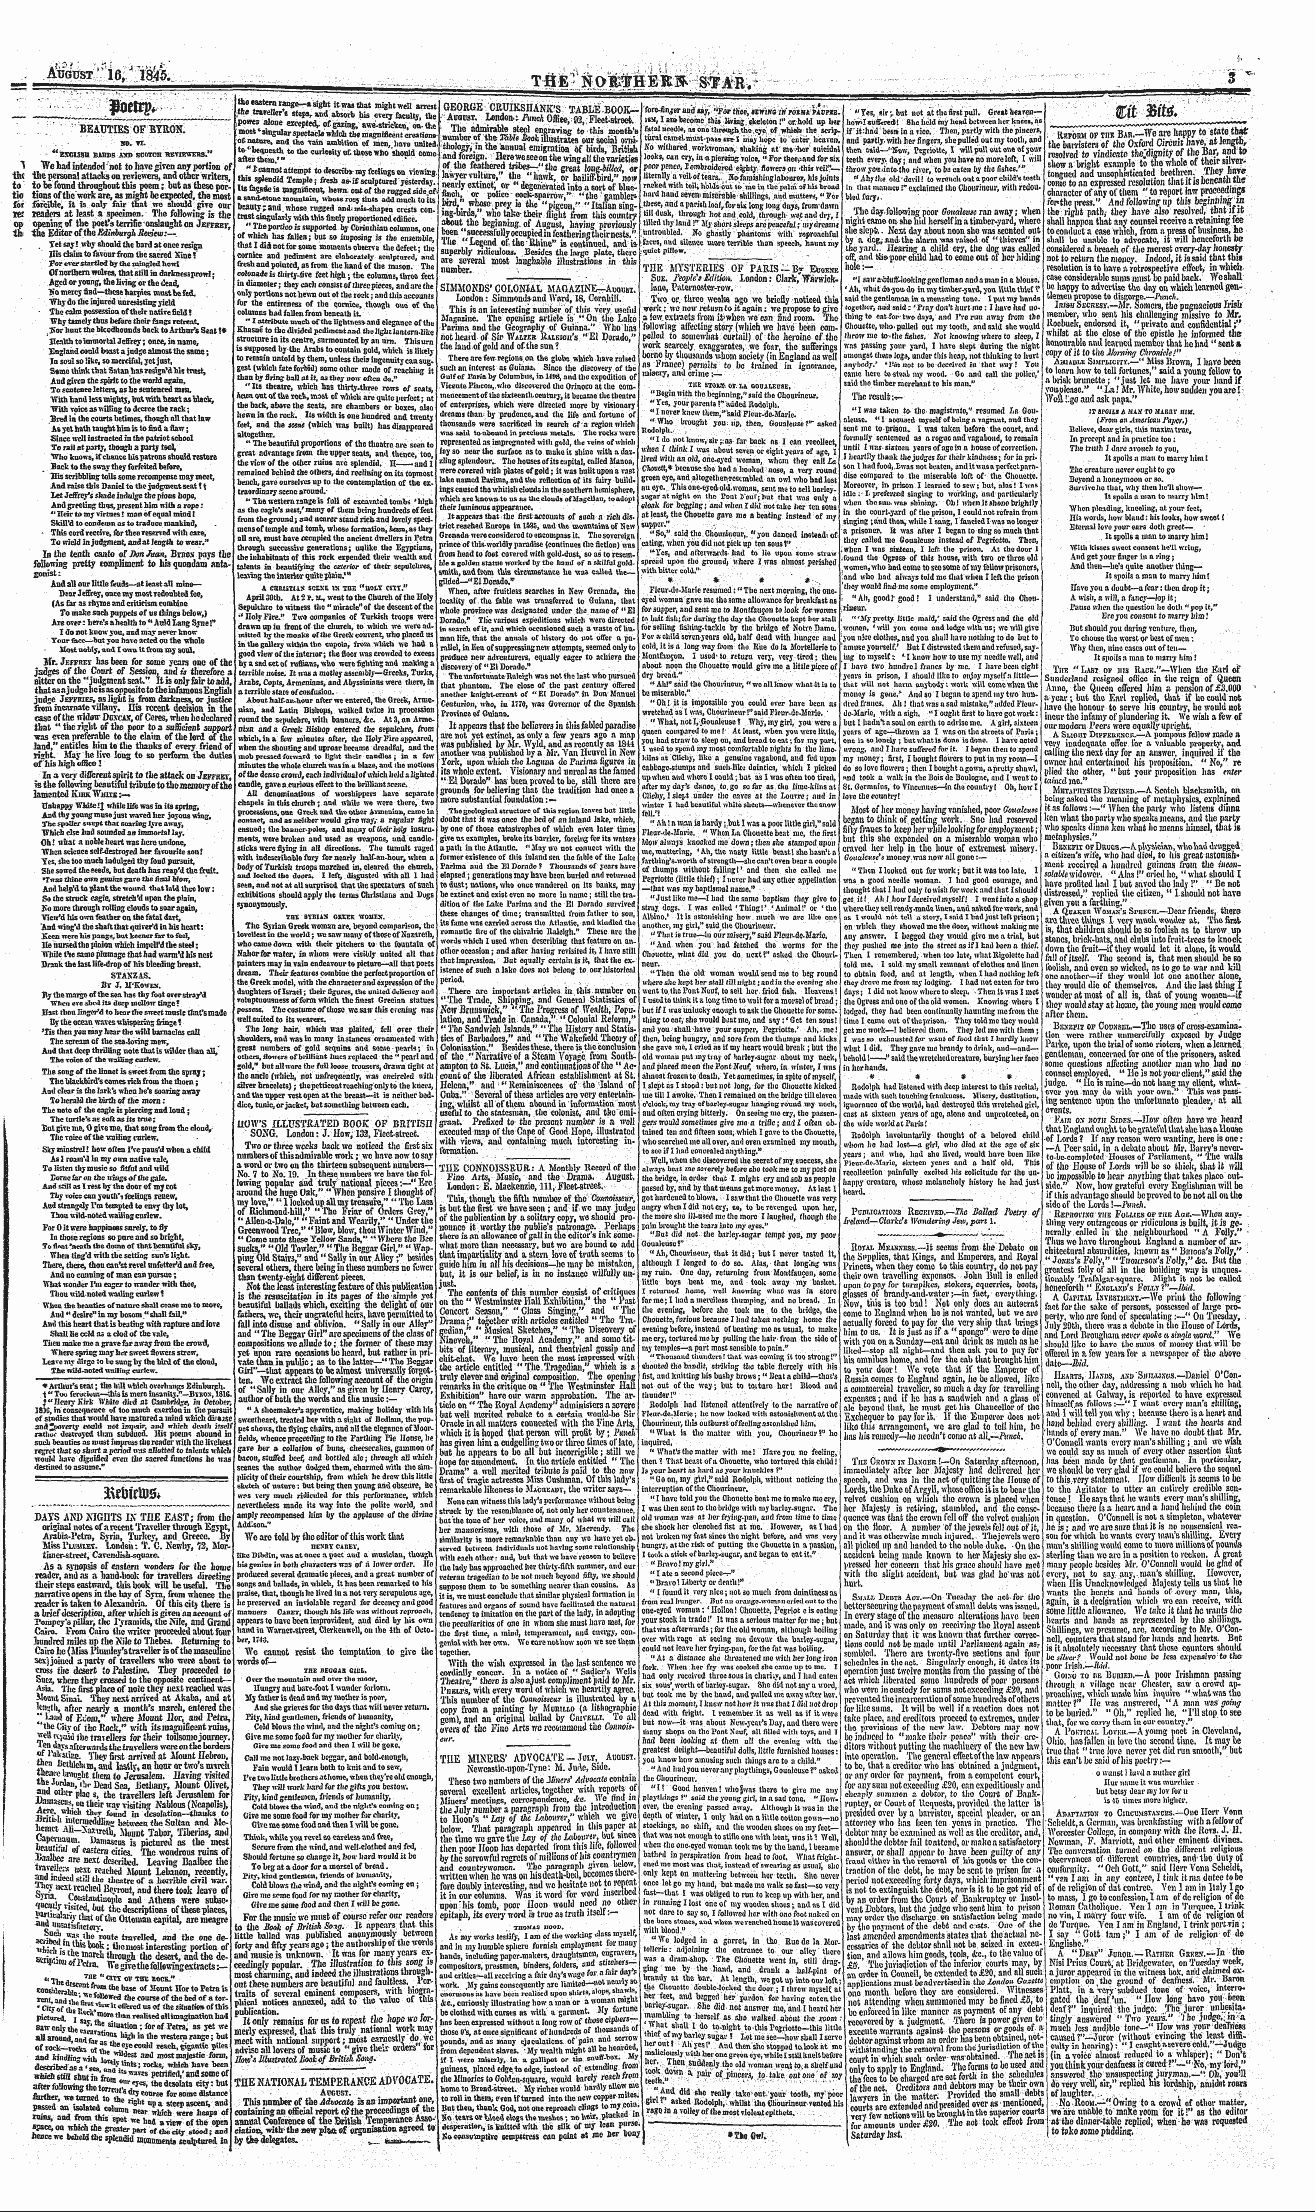 Northern Star (1837-1852): jS F Y, 3rd edition - Tit $I&